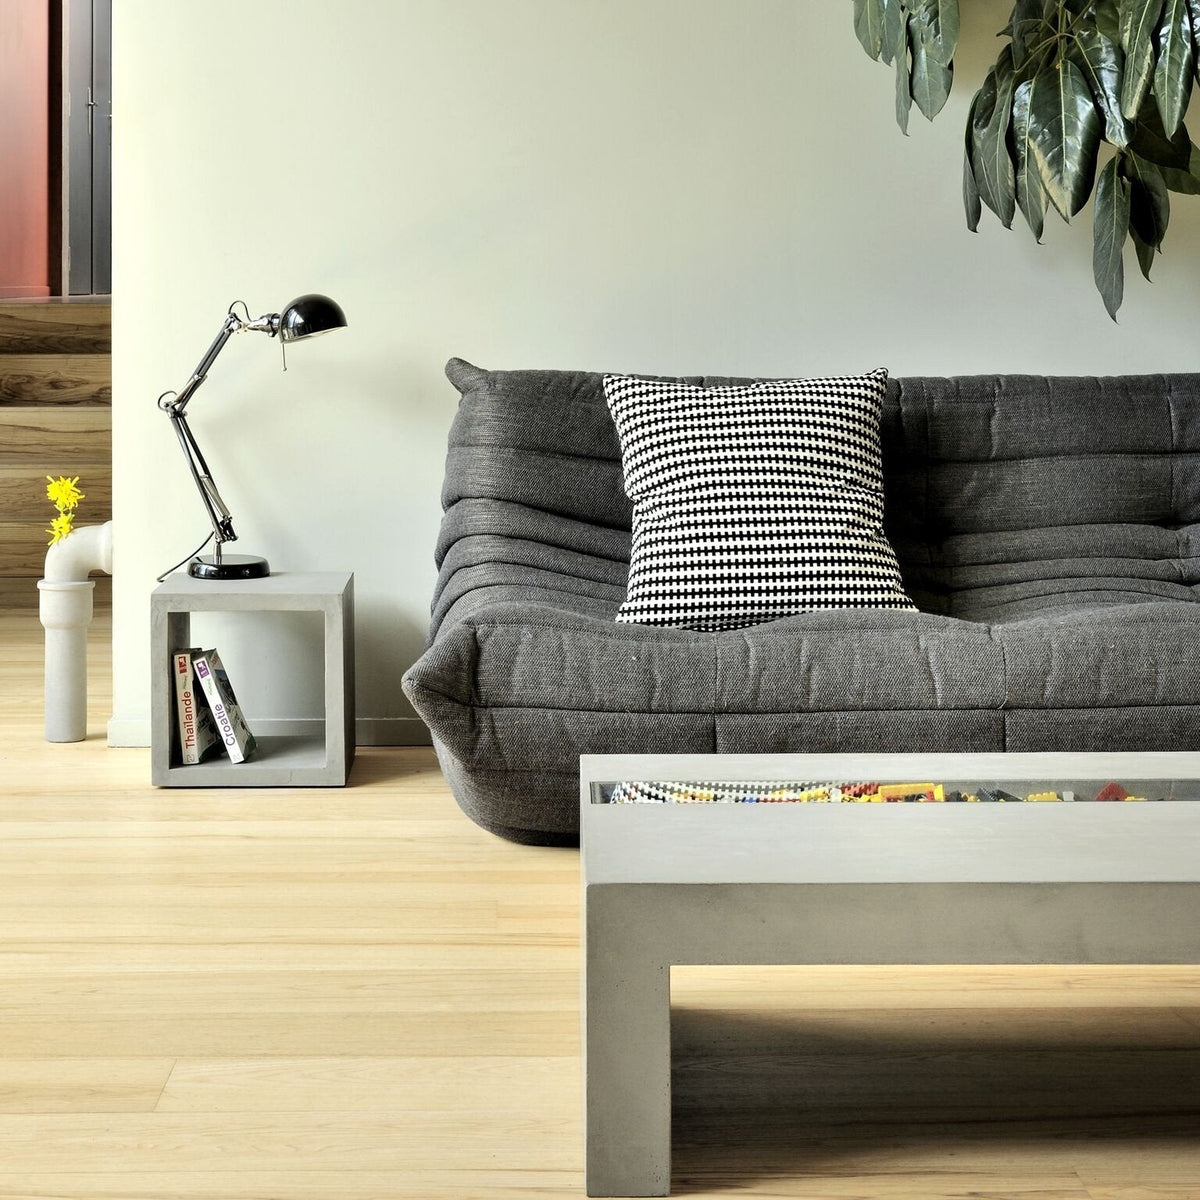 Zen Concrete Coffee Table-Lyon Beton-Contract Furniture Store